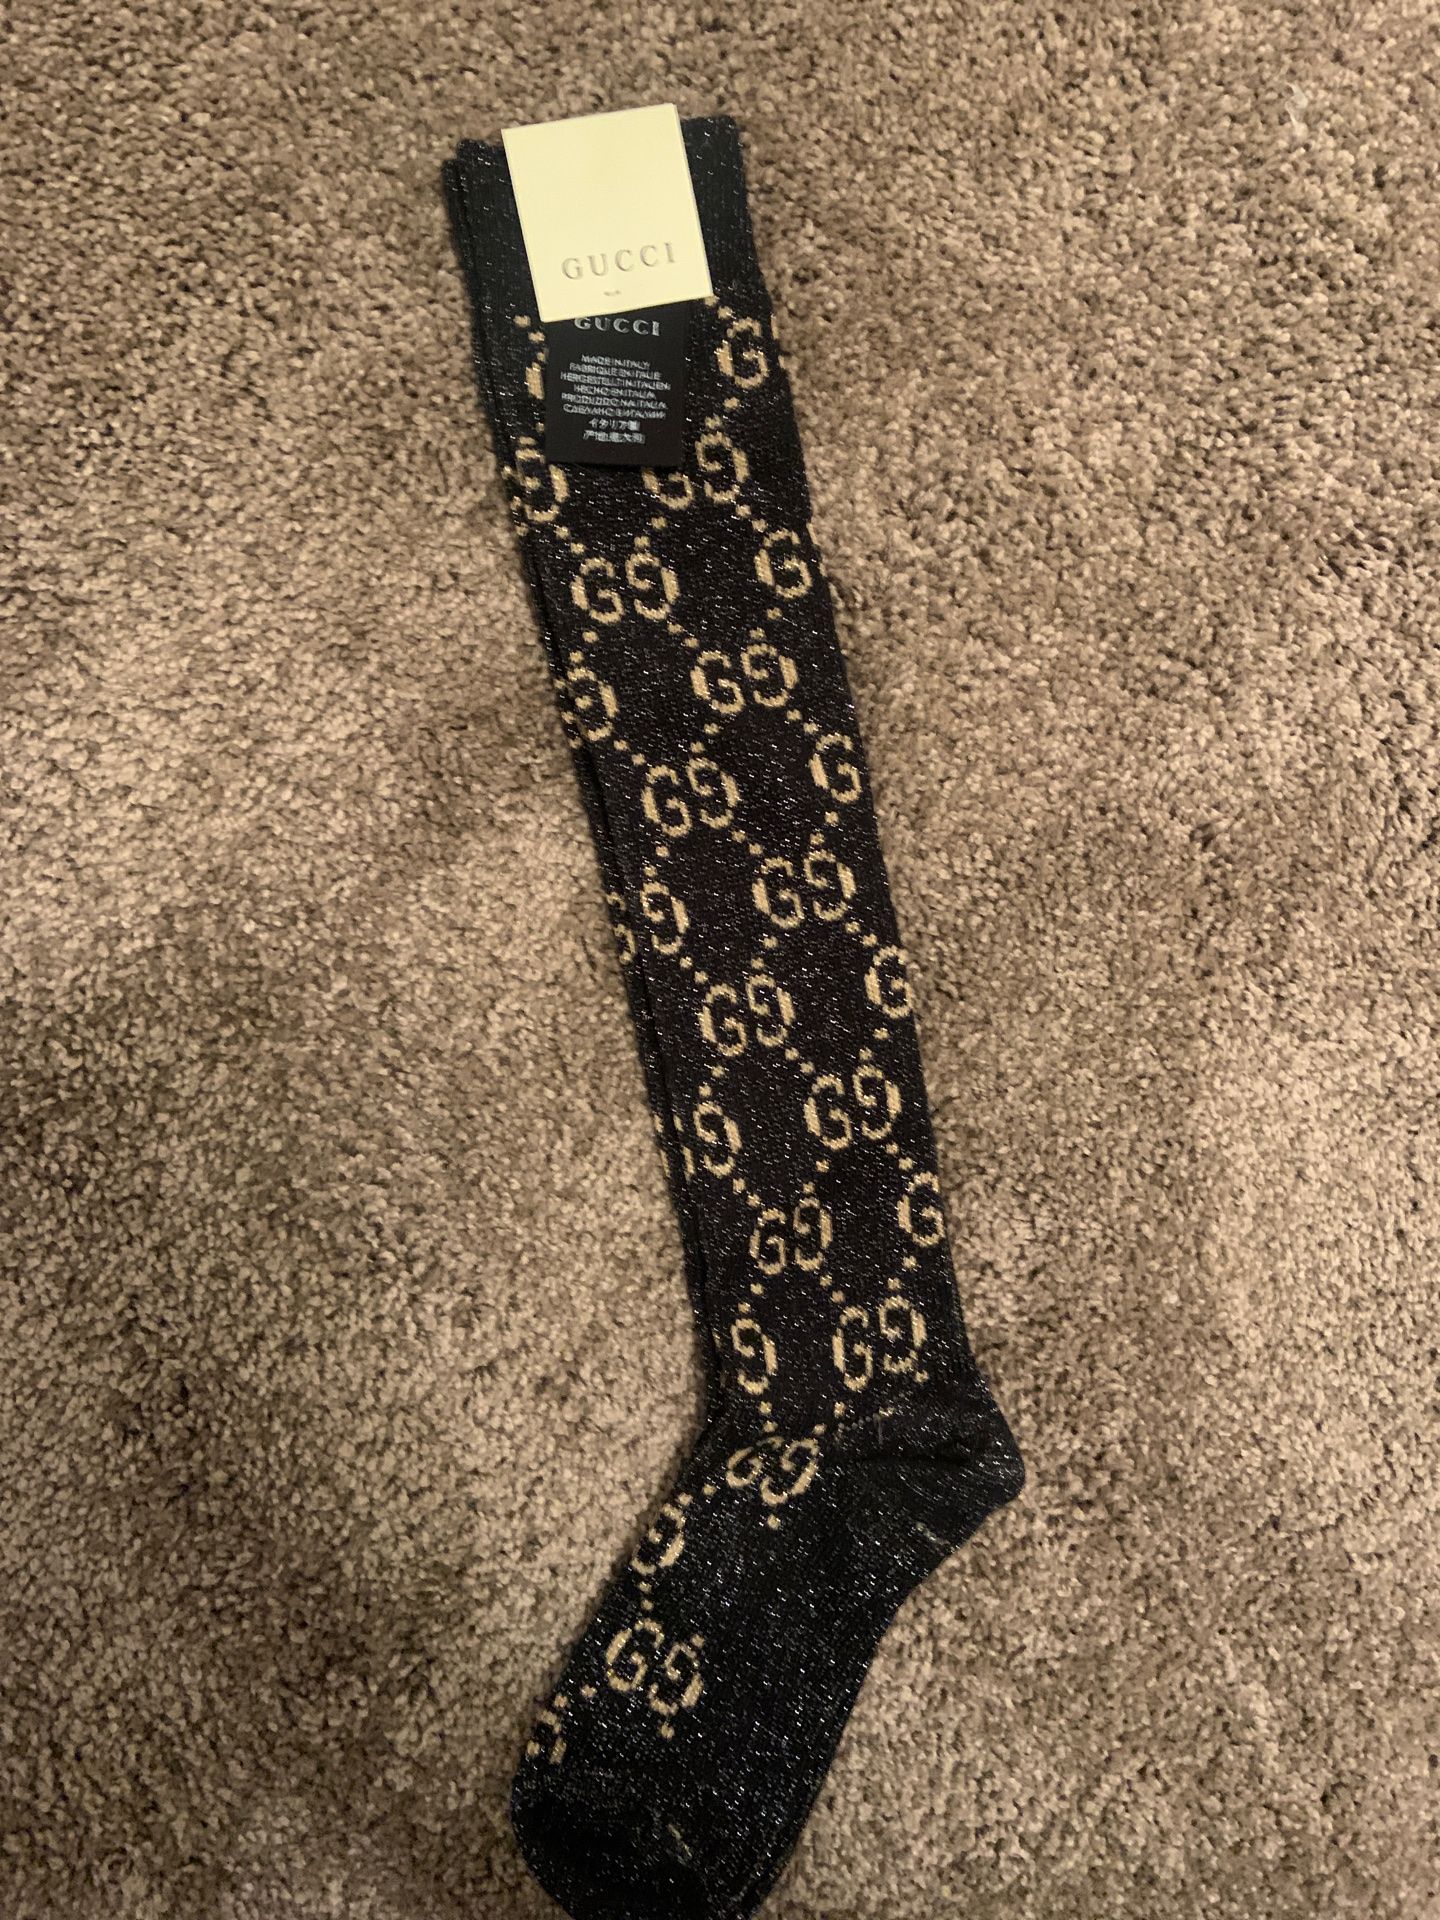 Sparkly black & gold Gucci socks